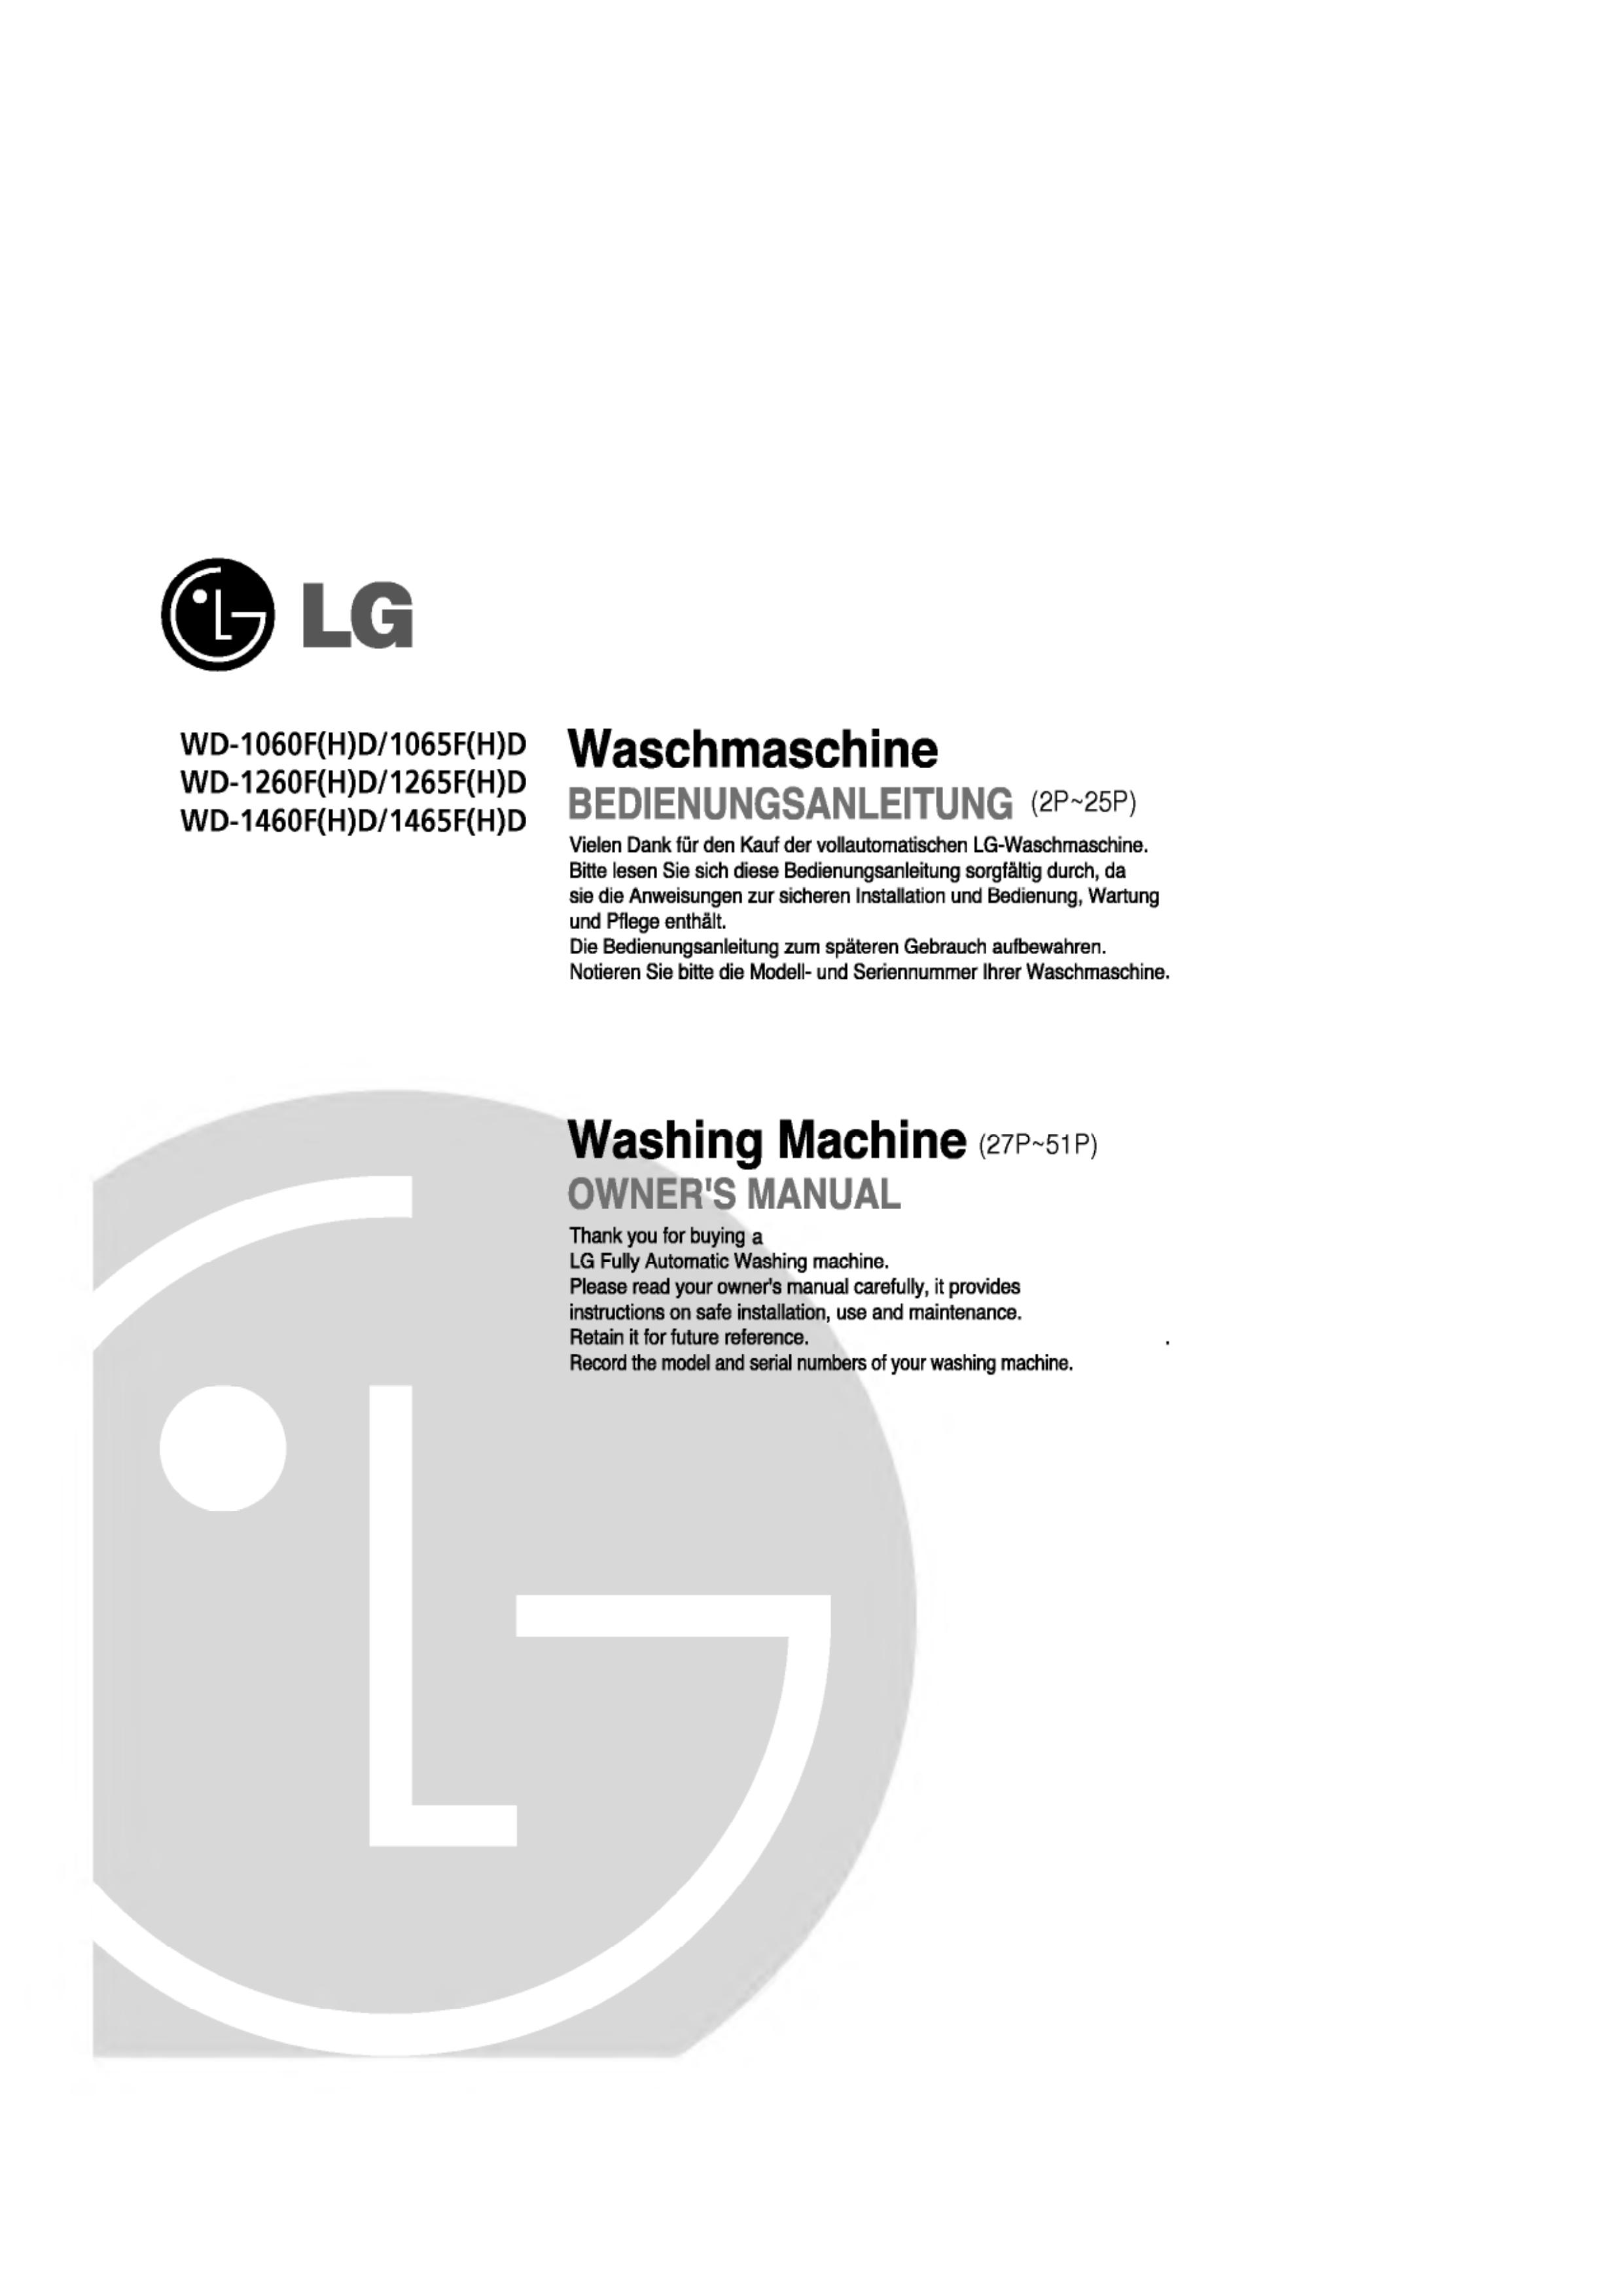 LG Electronics 1465(H)D Washer User Manual